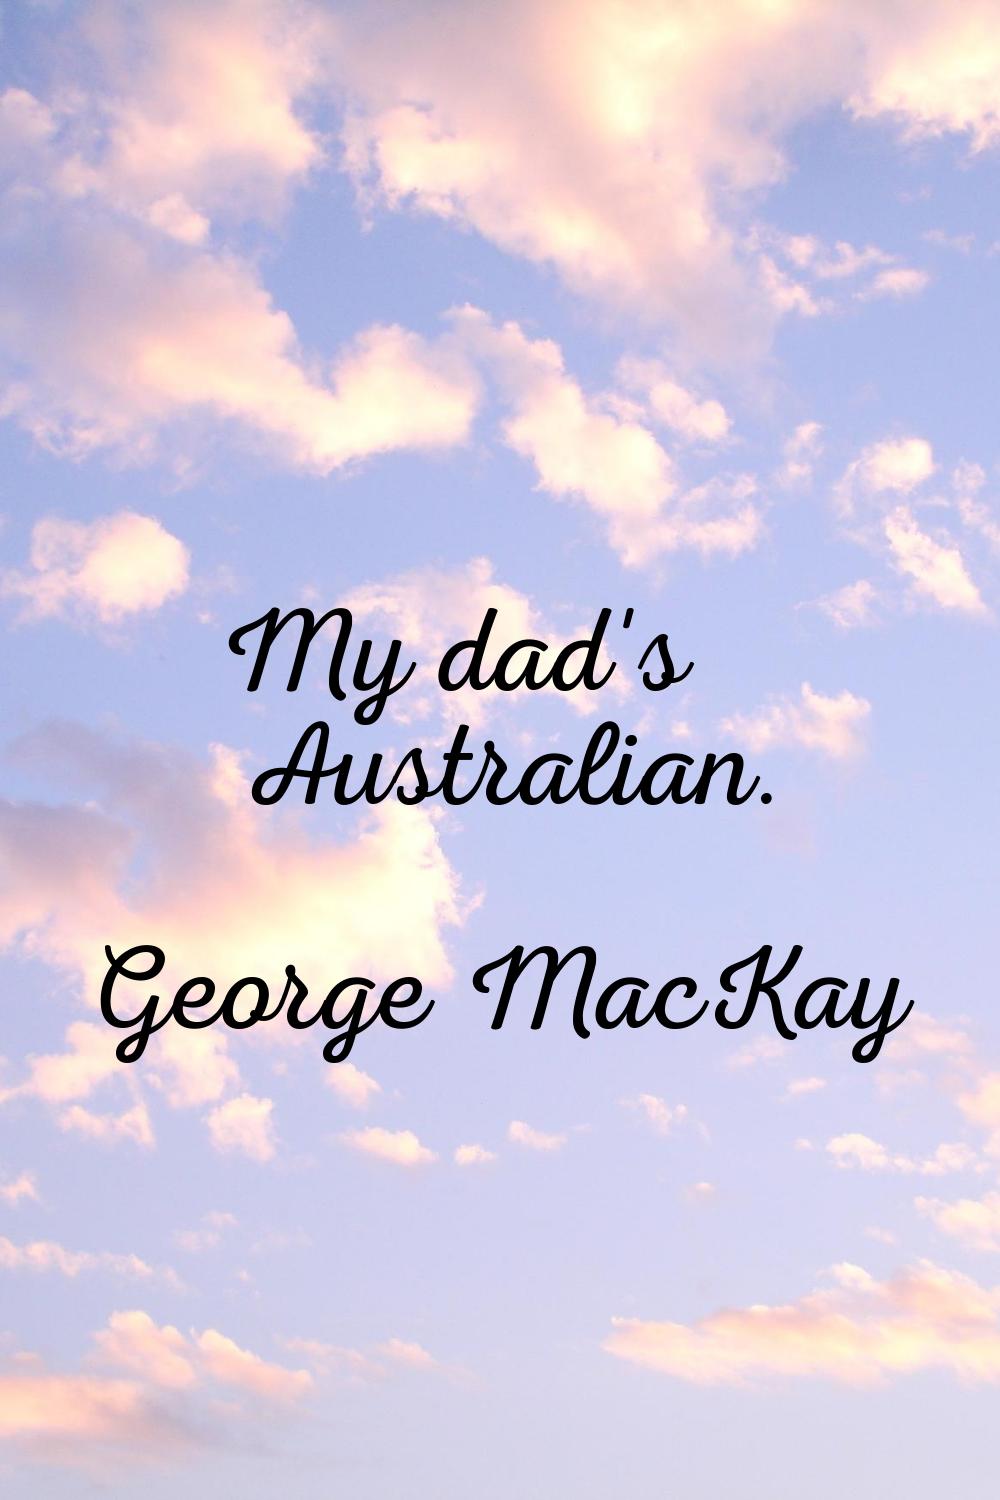 My dad's Australian.